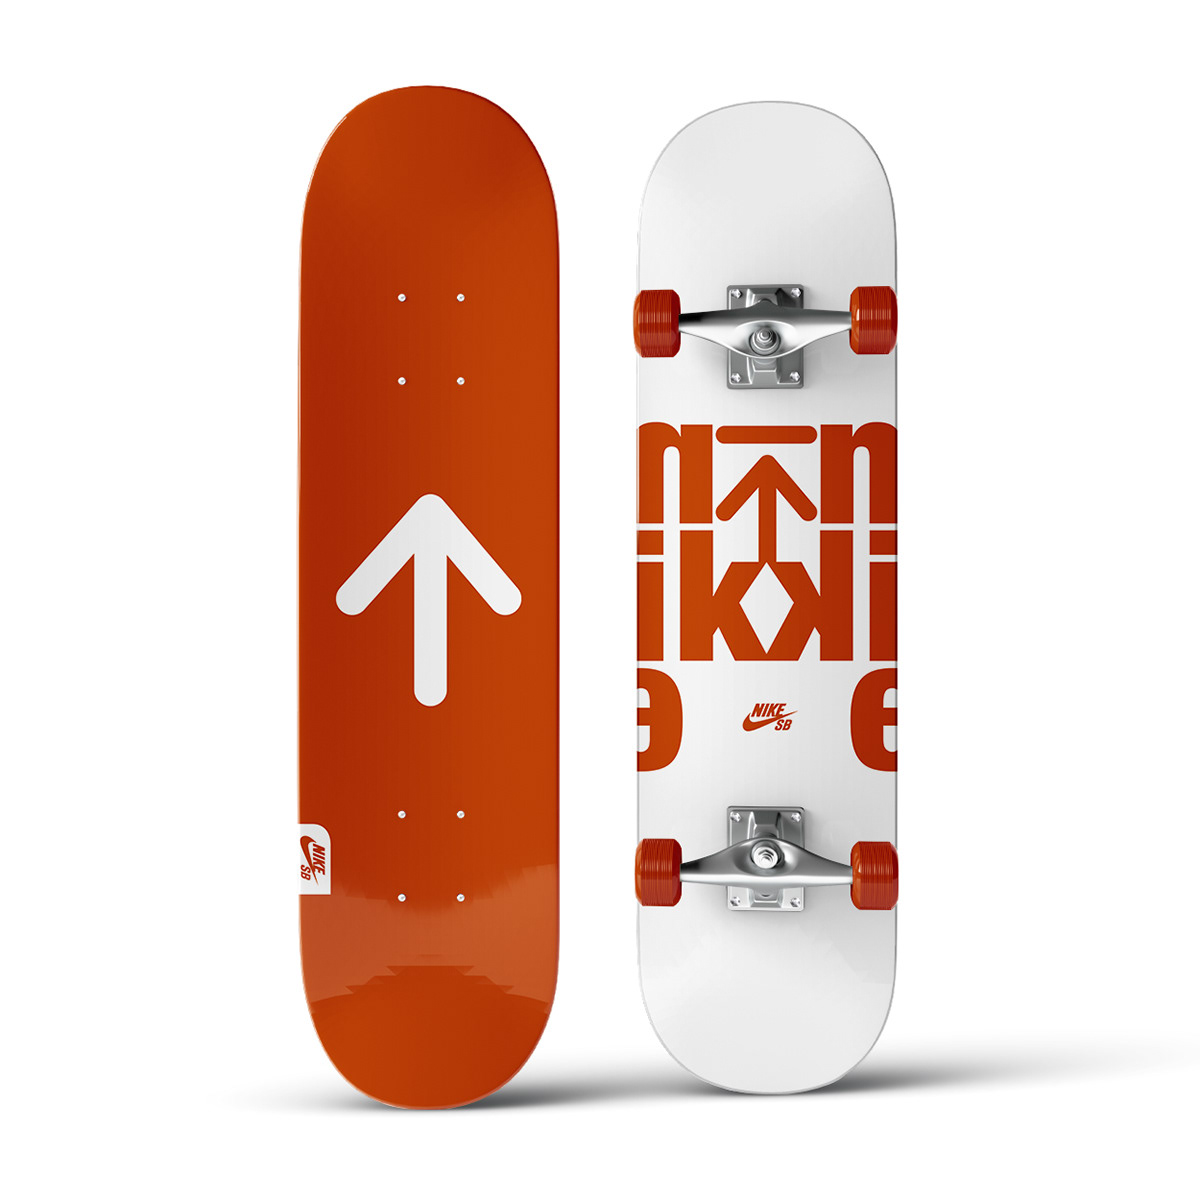 Boarddesign boarddesigner graphicdesign Nike NikeDesign packagedesign packagingdesign skateboard skateboarddesign